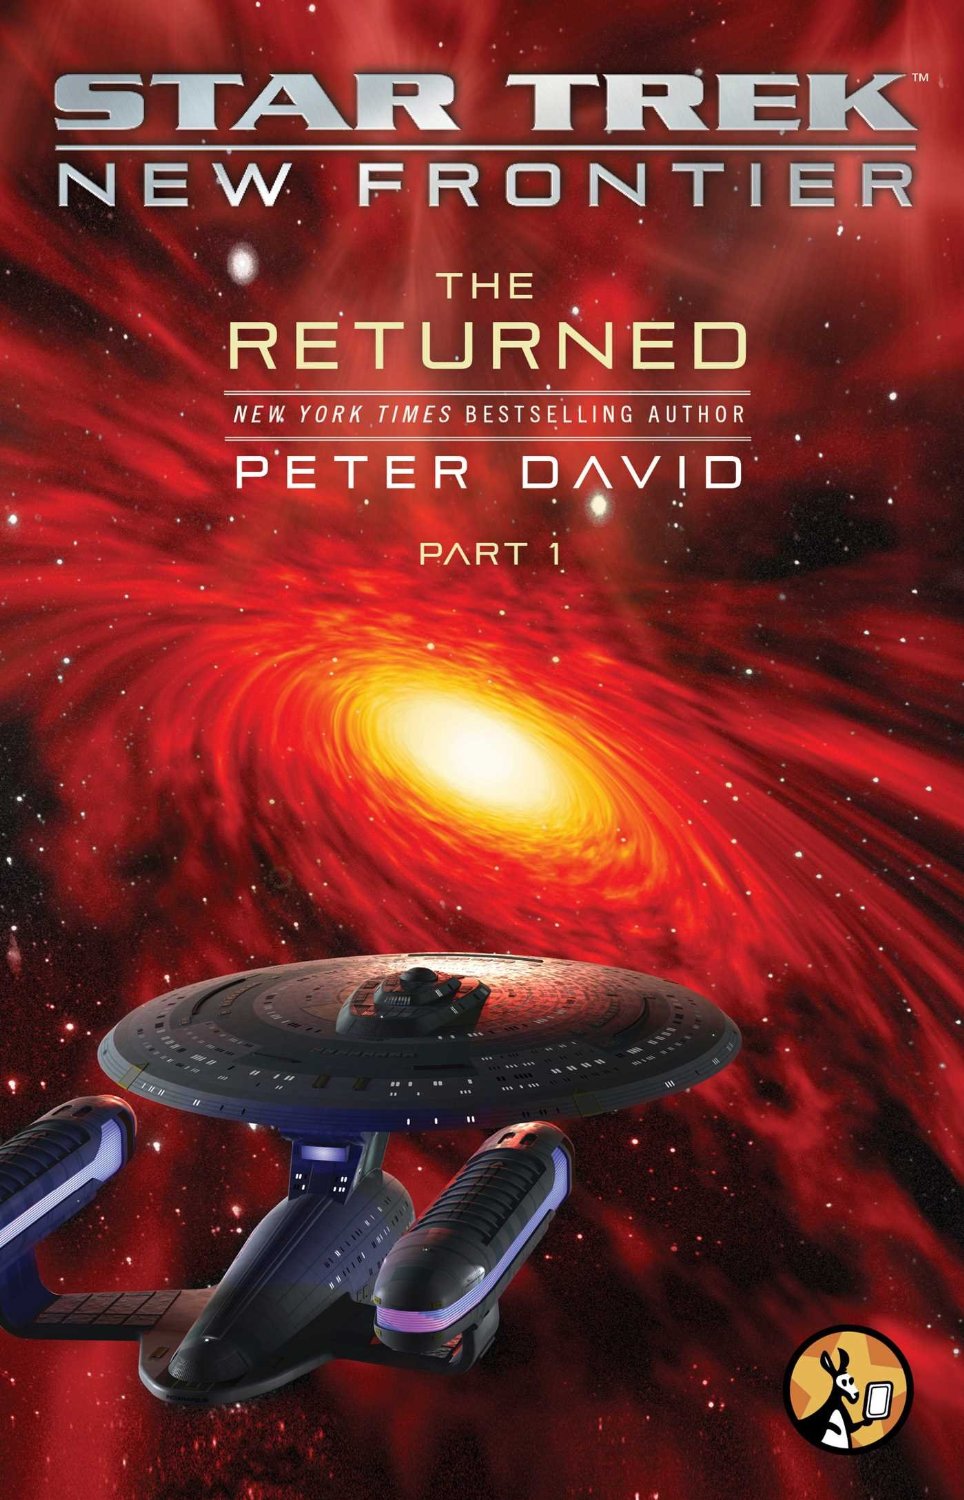 “Star Trek: New Frontier: The Returned Part 1” Review by Jimsscifi.blogspot.com